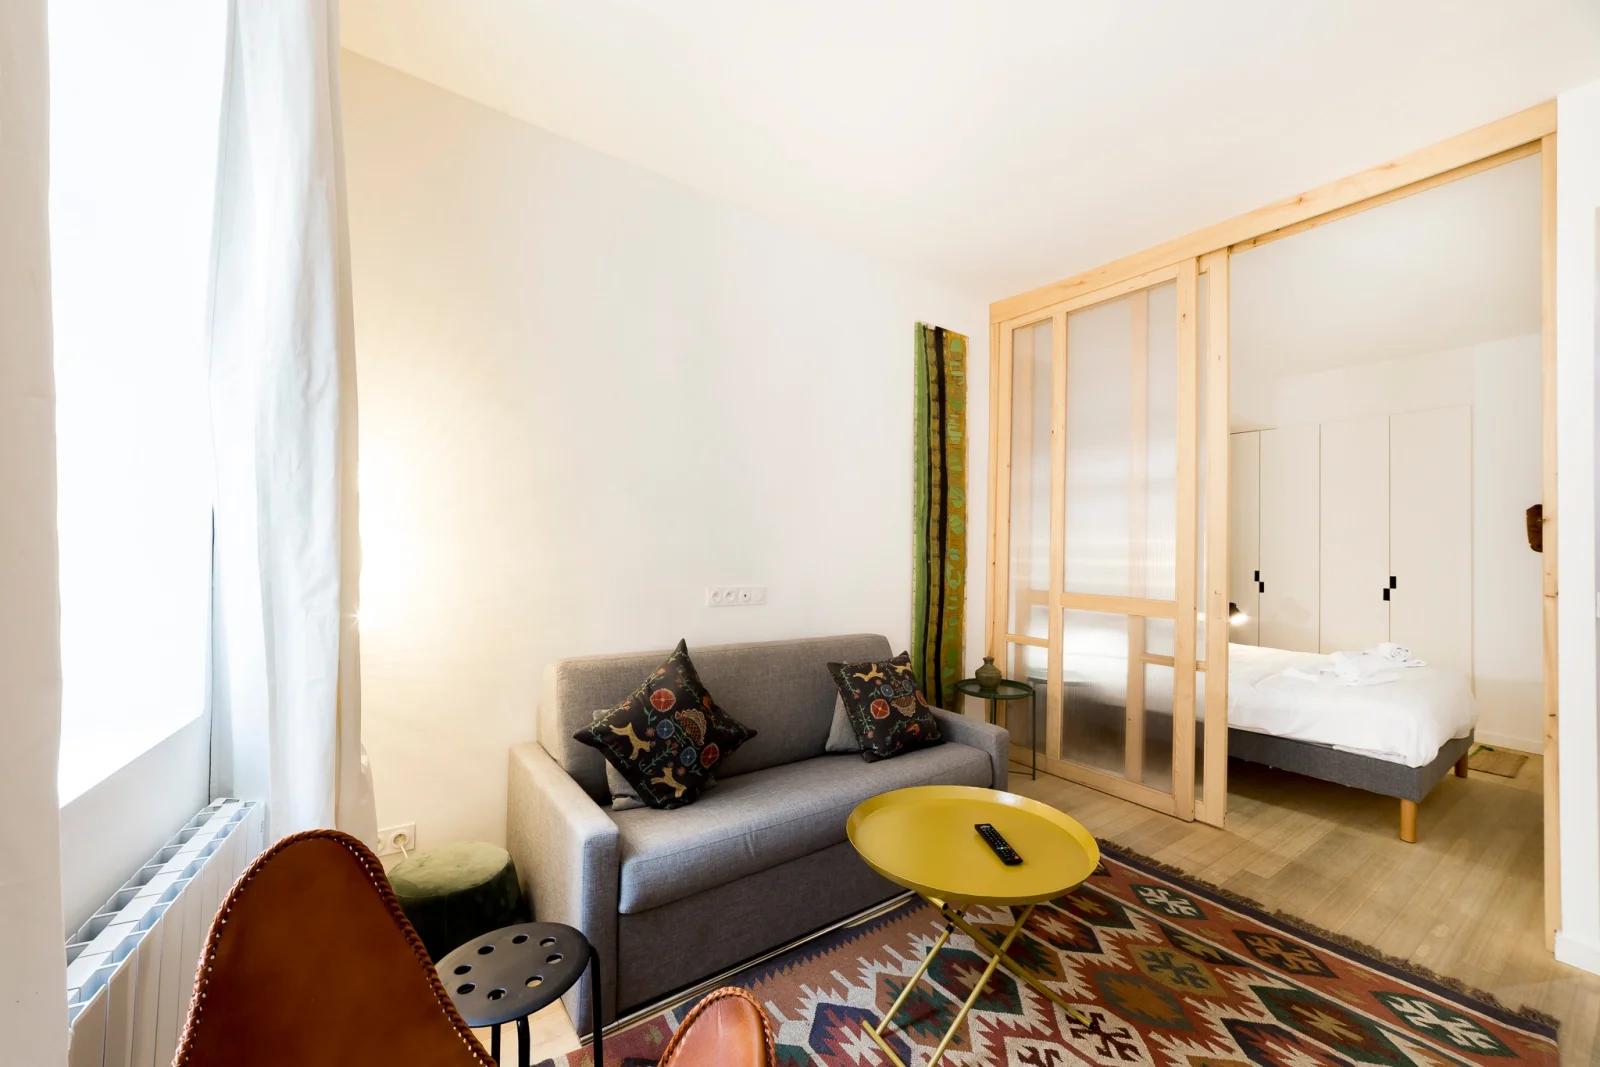 Bedroom in L'Ethnic Ambience - Comfortable venue in Vieux Lyon - 1